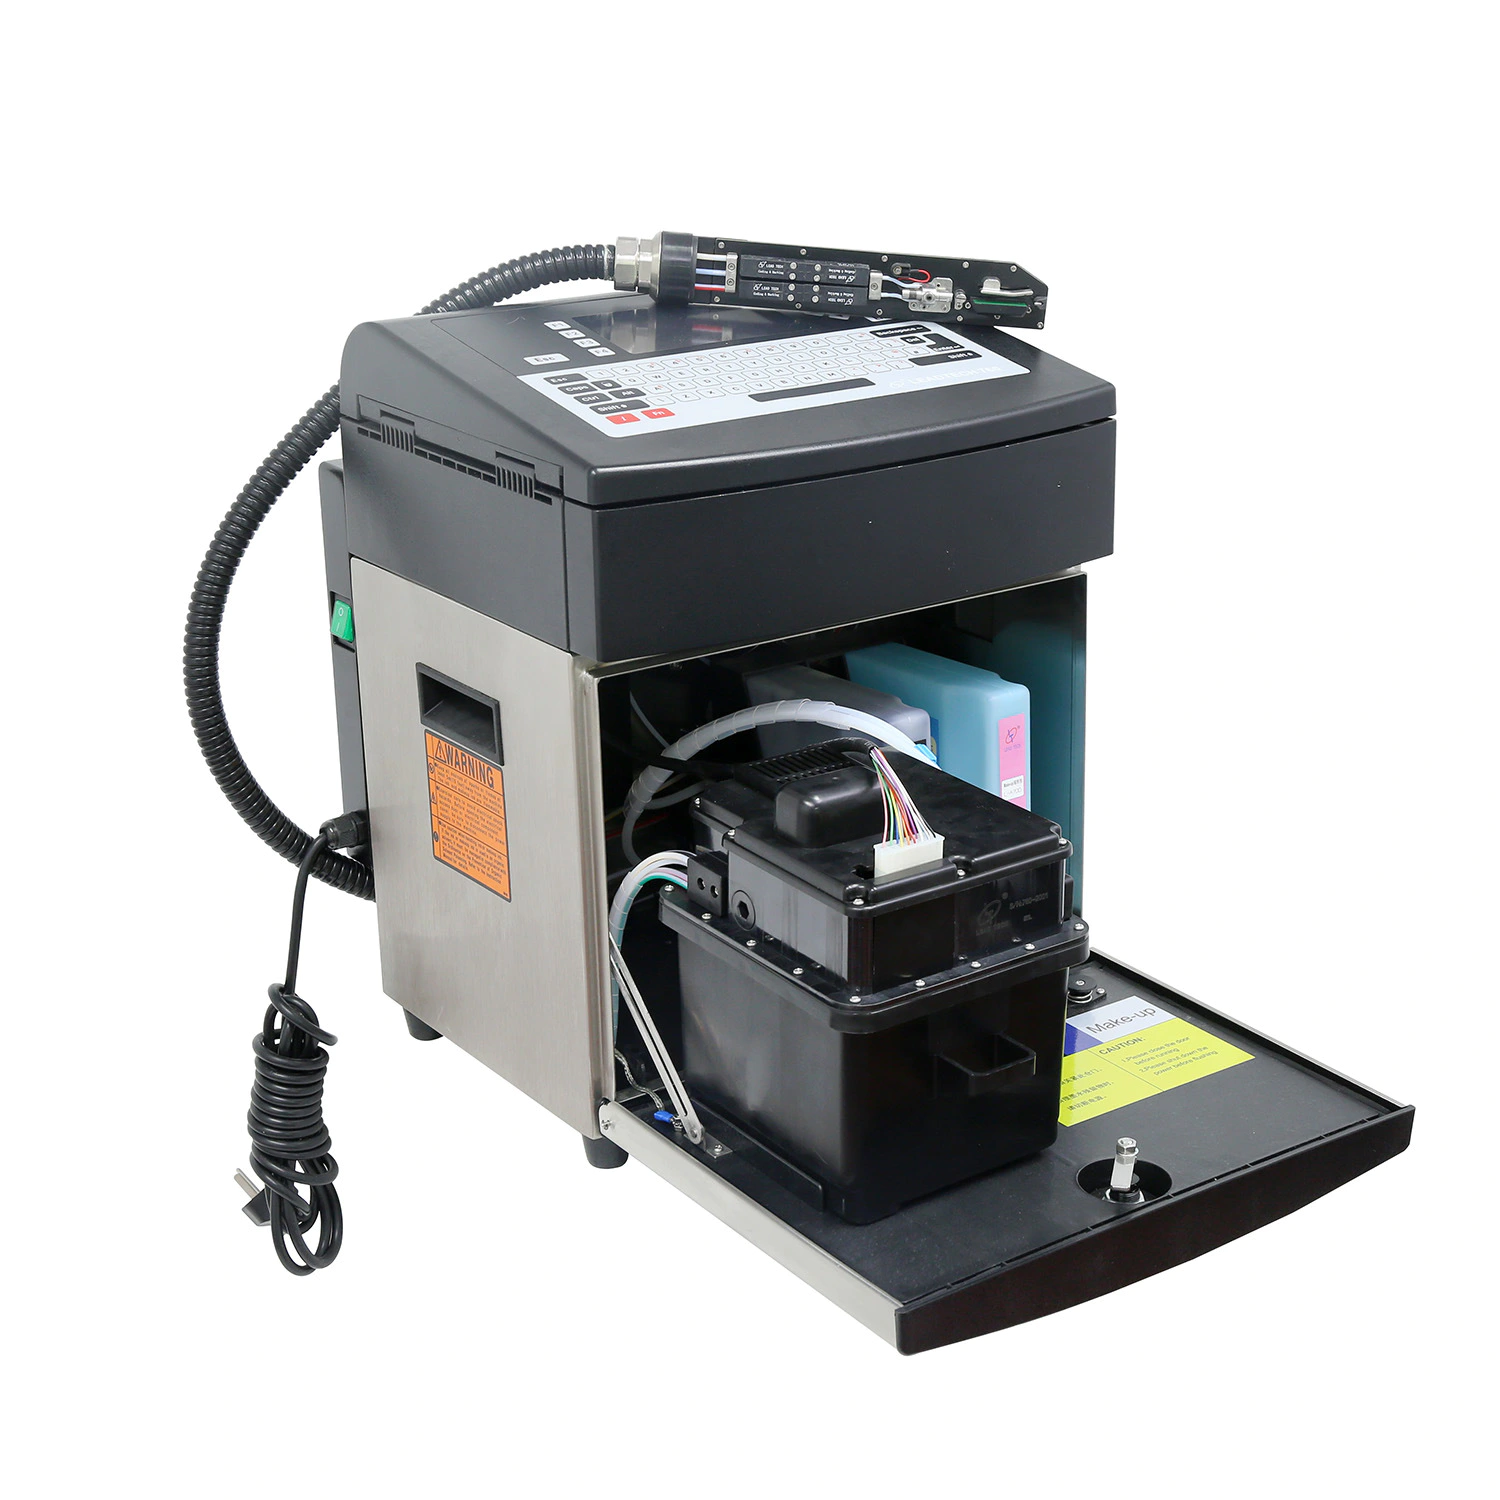 Leadtech Lt760 Ink Jet Printer for Industrial Printing